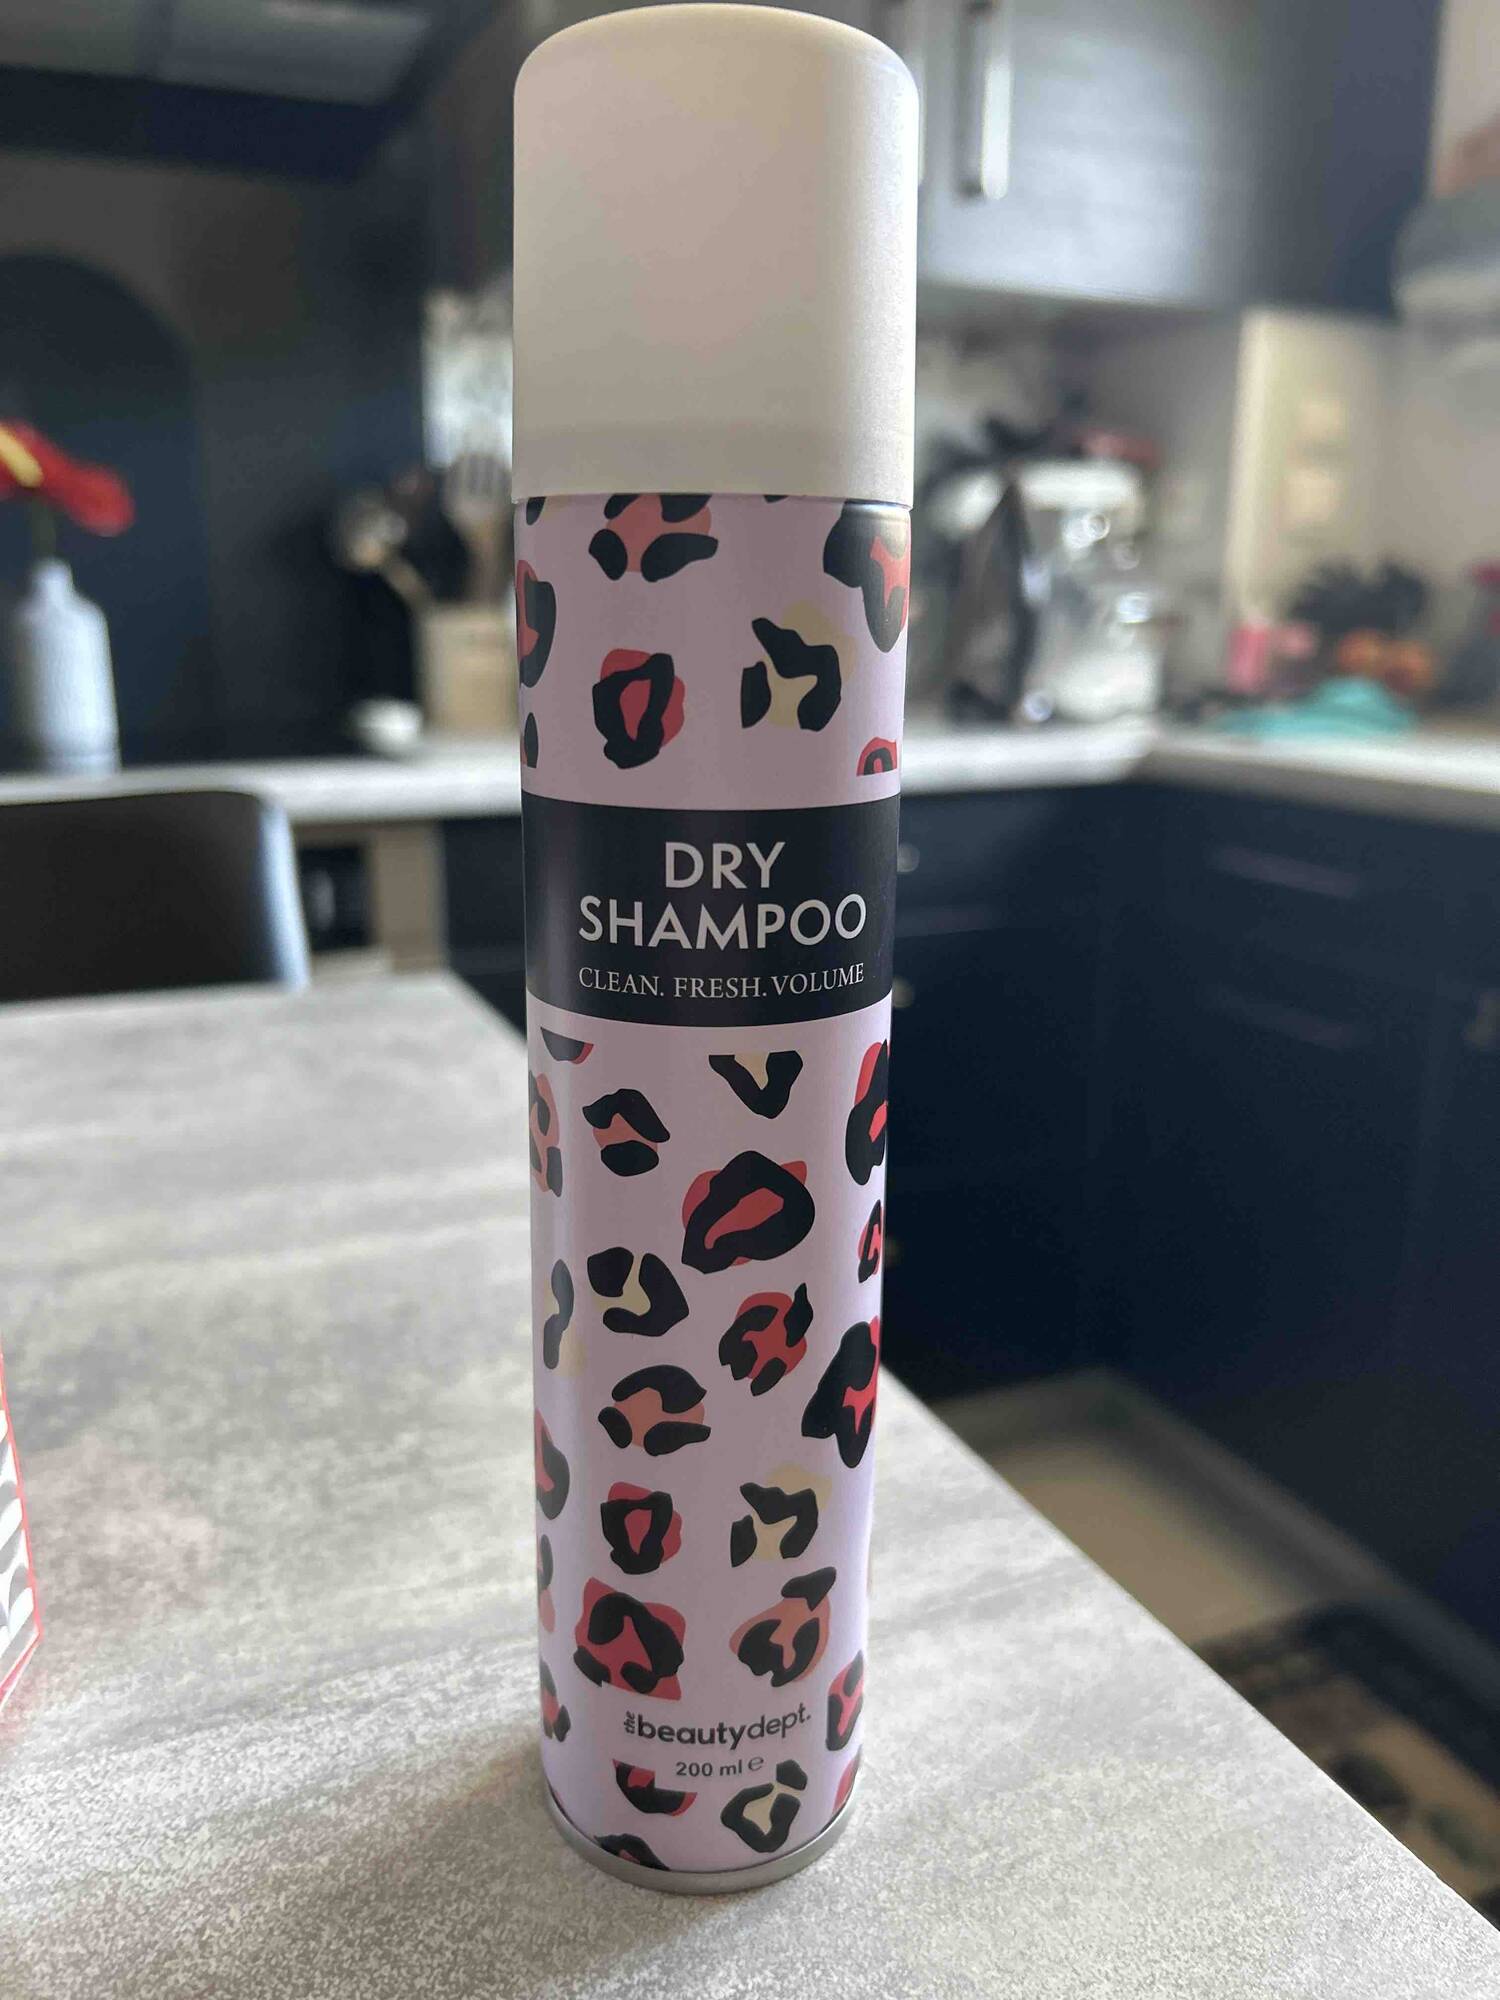 THE BEAUTY DEPT - Dry shampoo